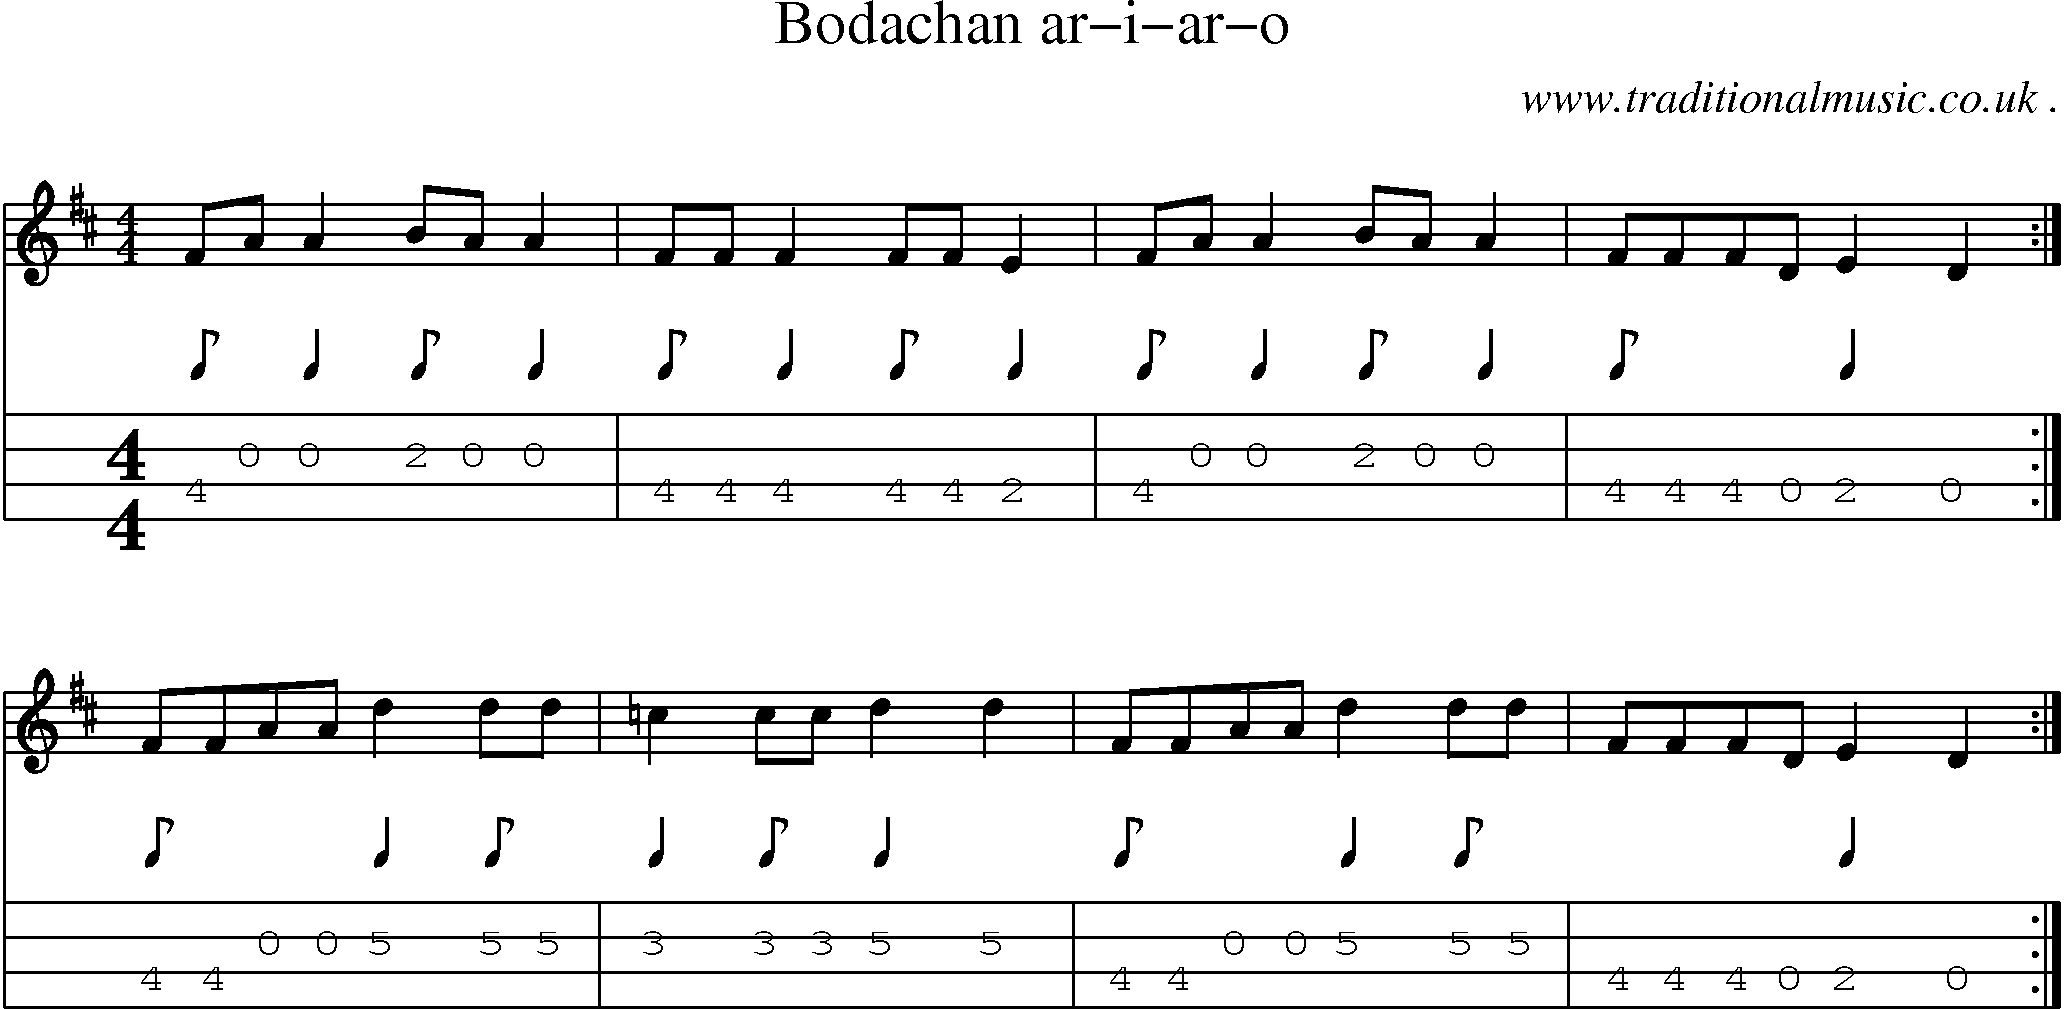 Sheet-music  score, Chords and Mandolin Tabs for Bodachan Ar-i-ar-o